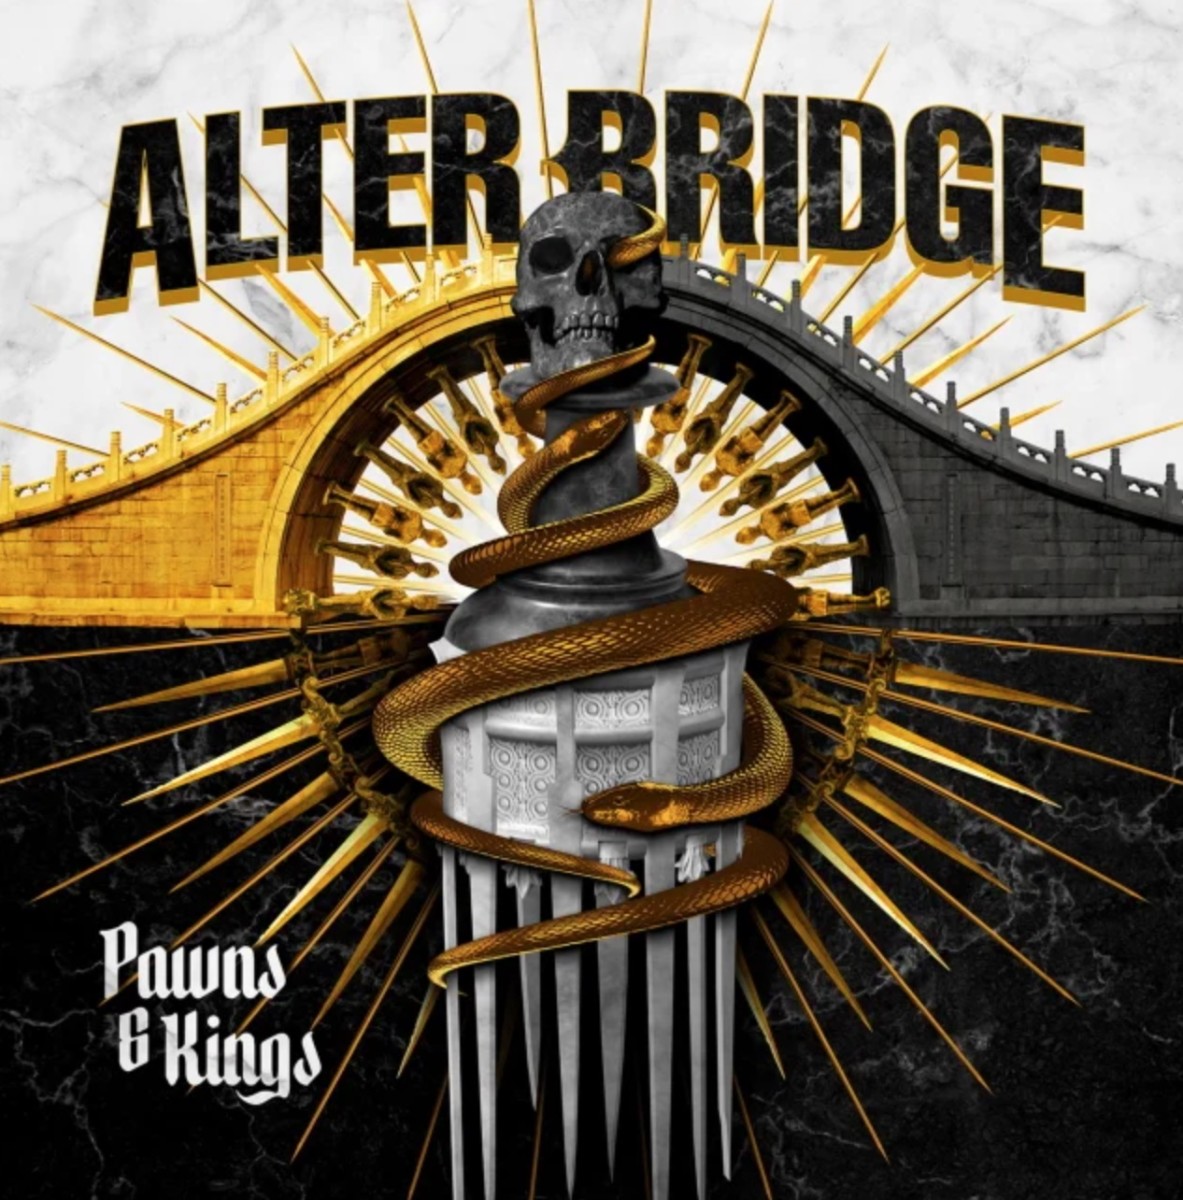 Alter Bridge detail new album, 'Pawns & Kings,' share title track